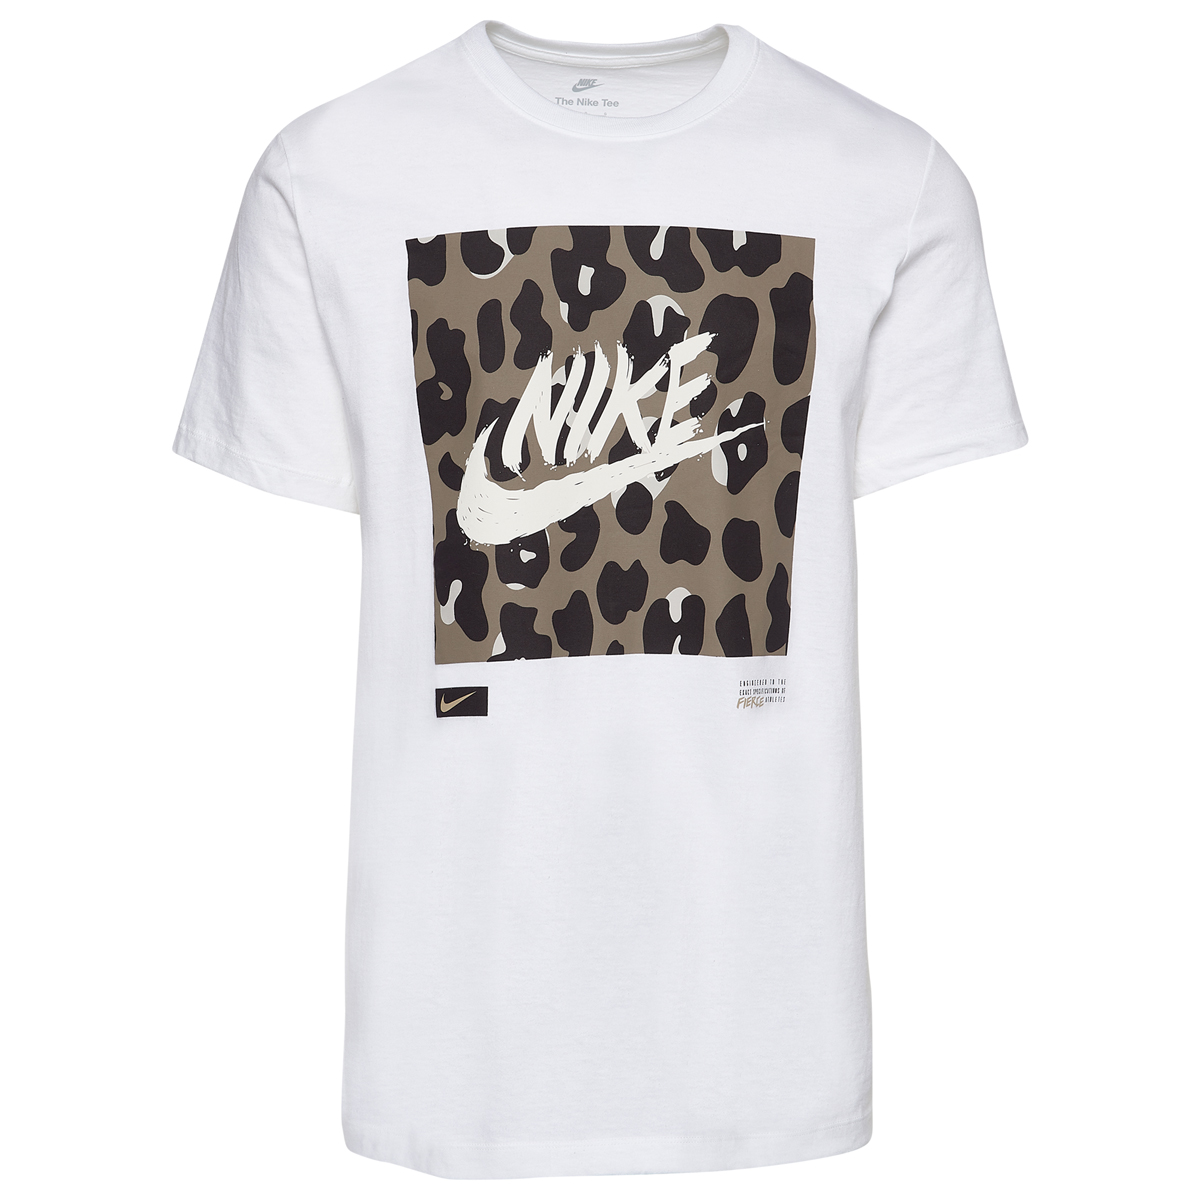 Nike-Animal-Instinct-Tunnel-Walk-T-Shirt-White